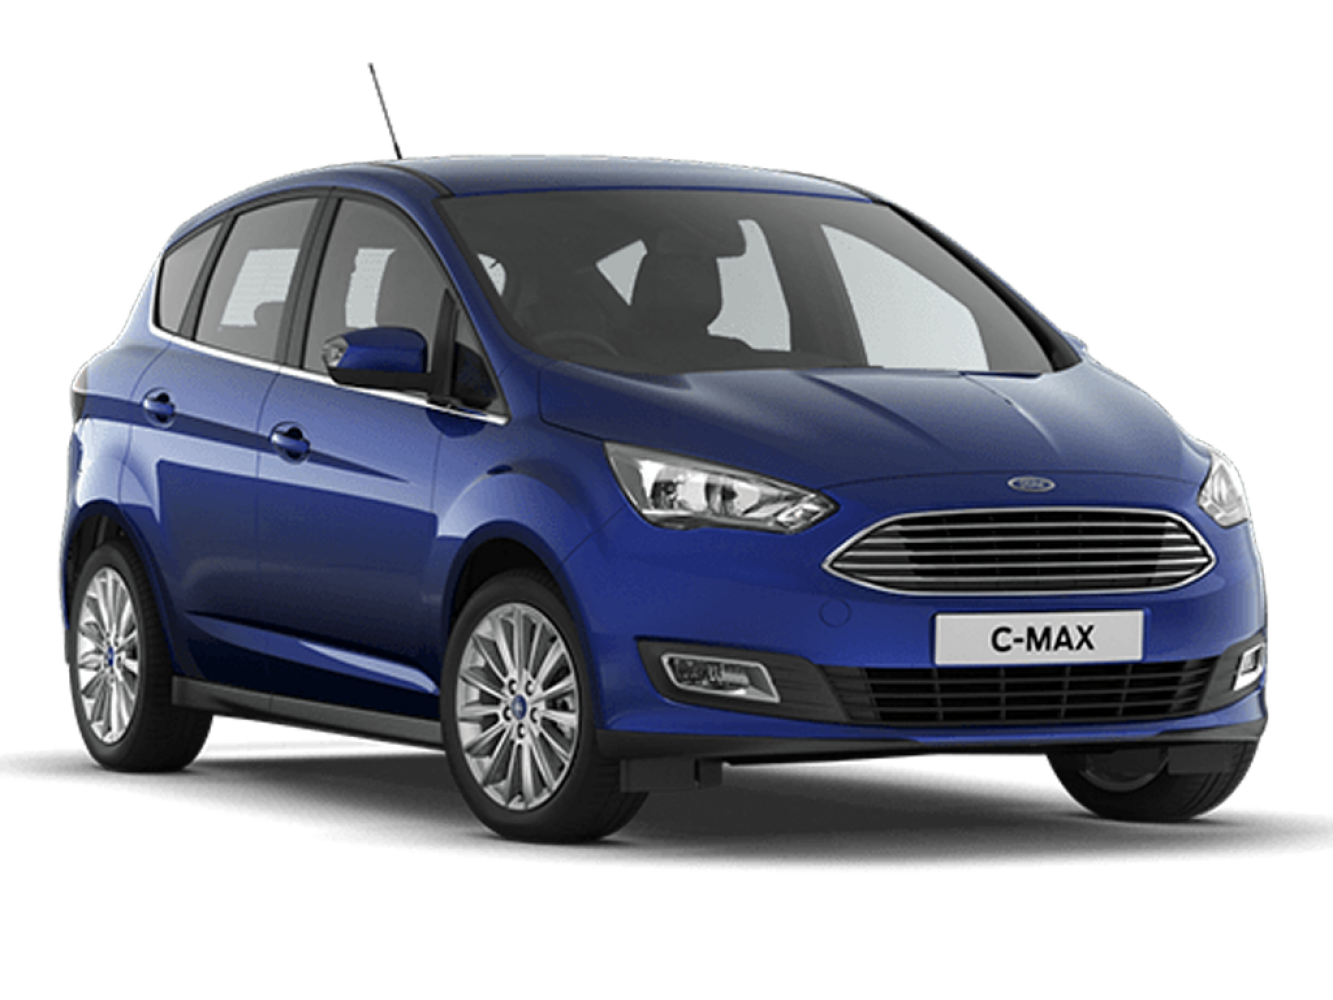 New Ford CMAX 1.5 TDCi Titanium 5dr Diesel Estate for Sale Bristol